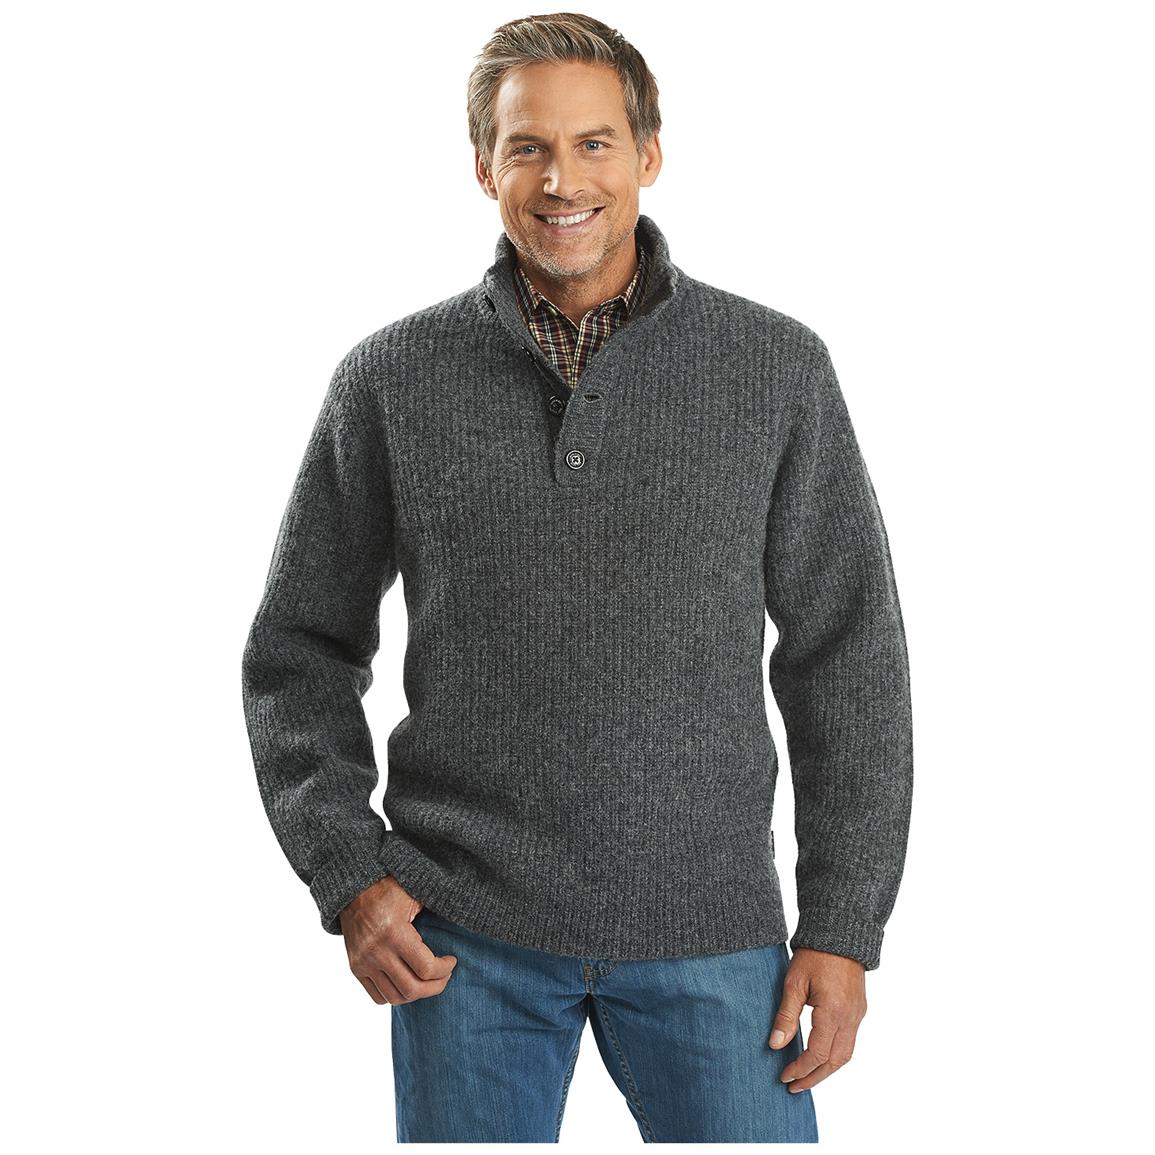 Woolrich Men's Sweater - 635753, Sweaters at Sportsman's Guide